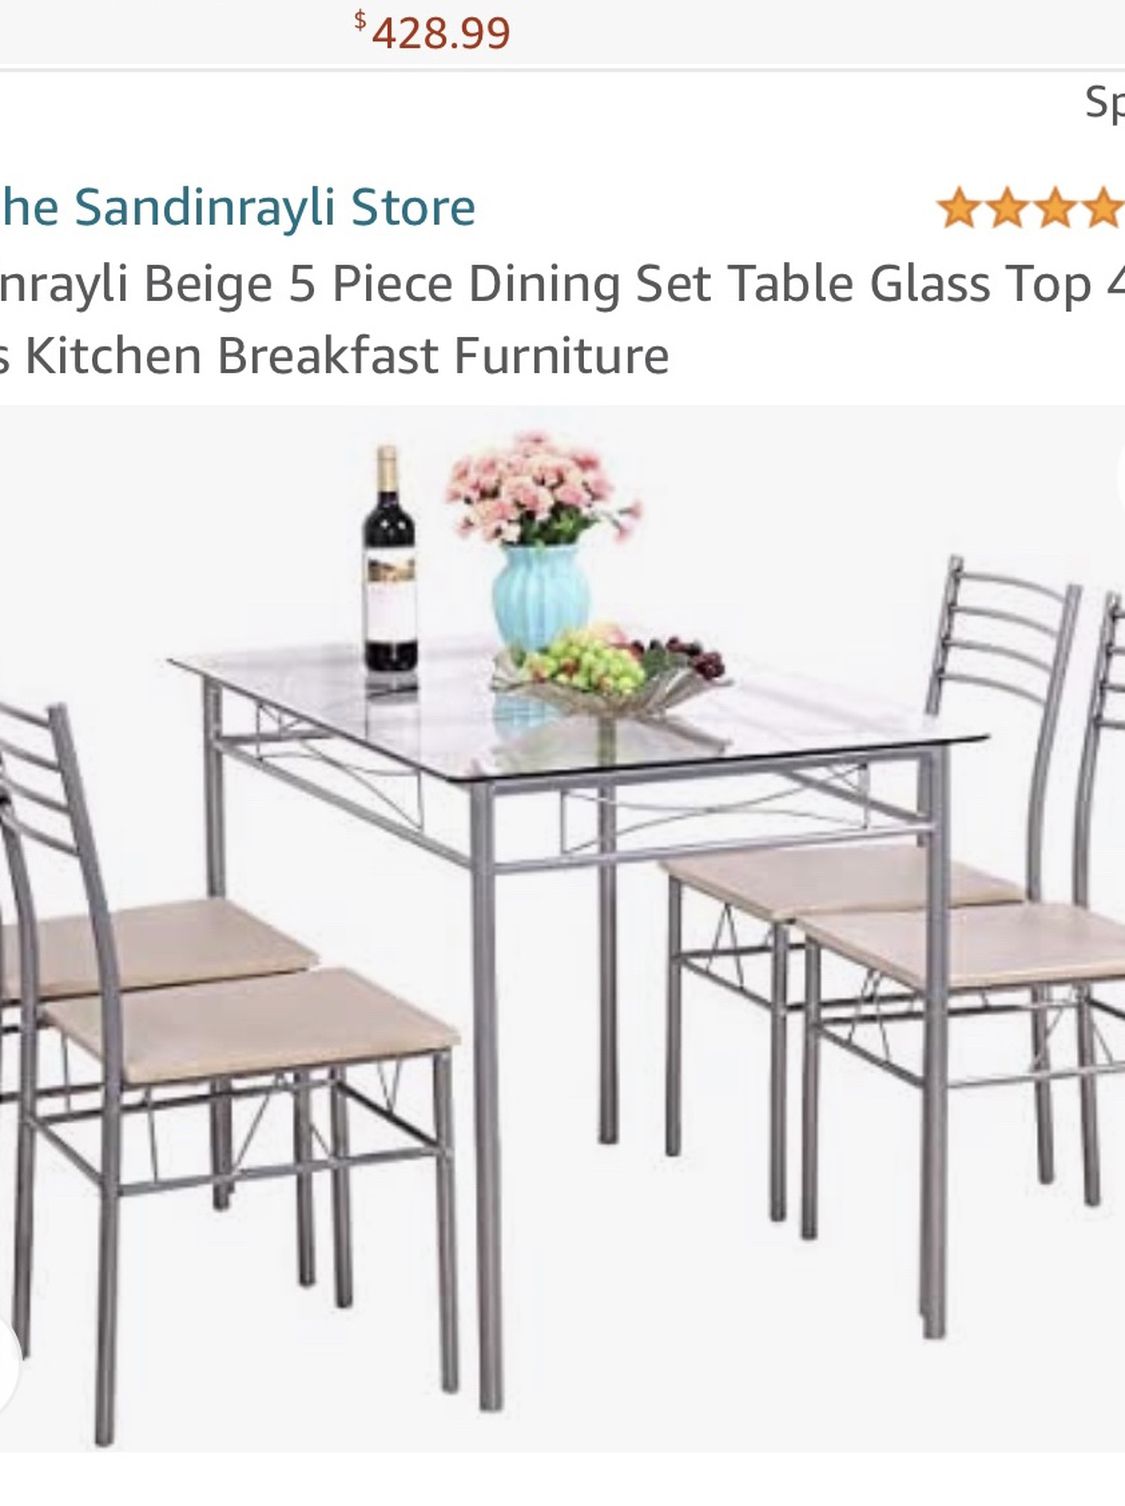 BRAND NEW! Sandinrayli Beige 5 Piece Dining Set Table Glass Top 4 Chairs Kitchen Breakfast Furniture